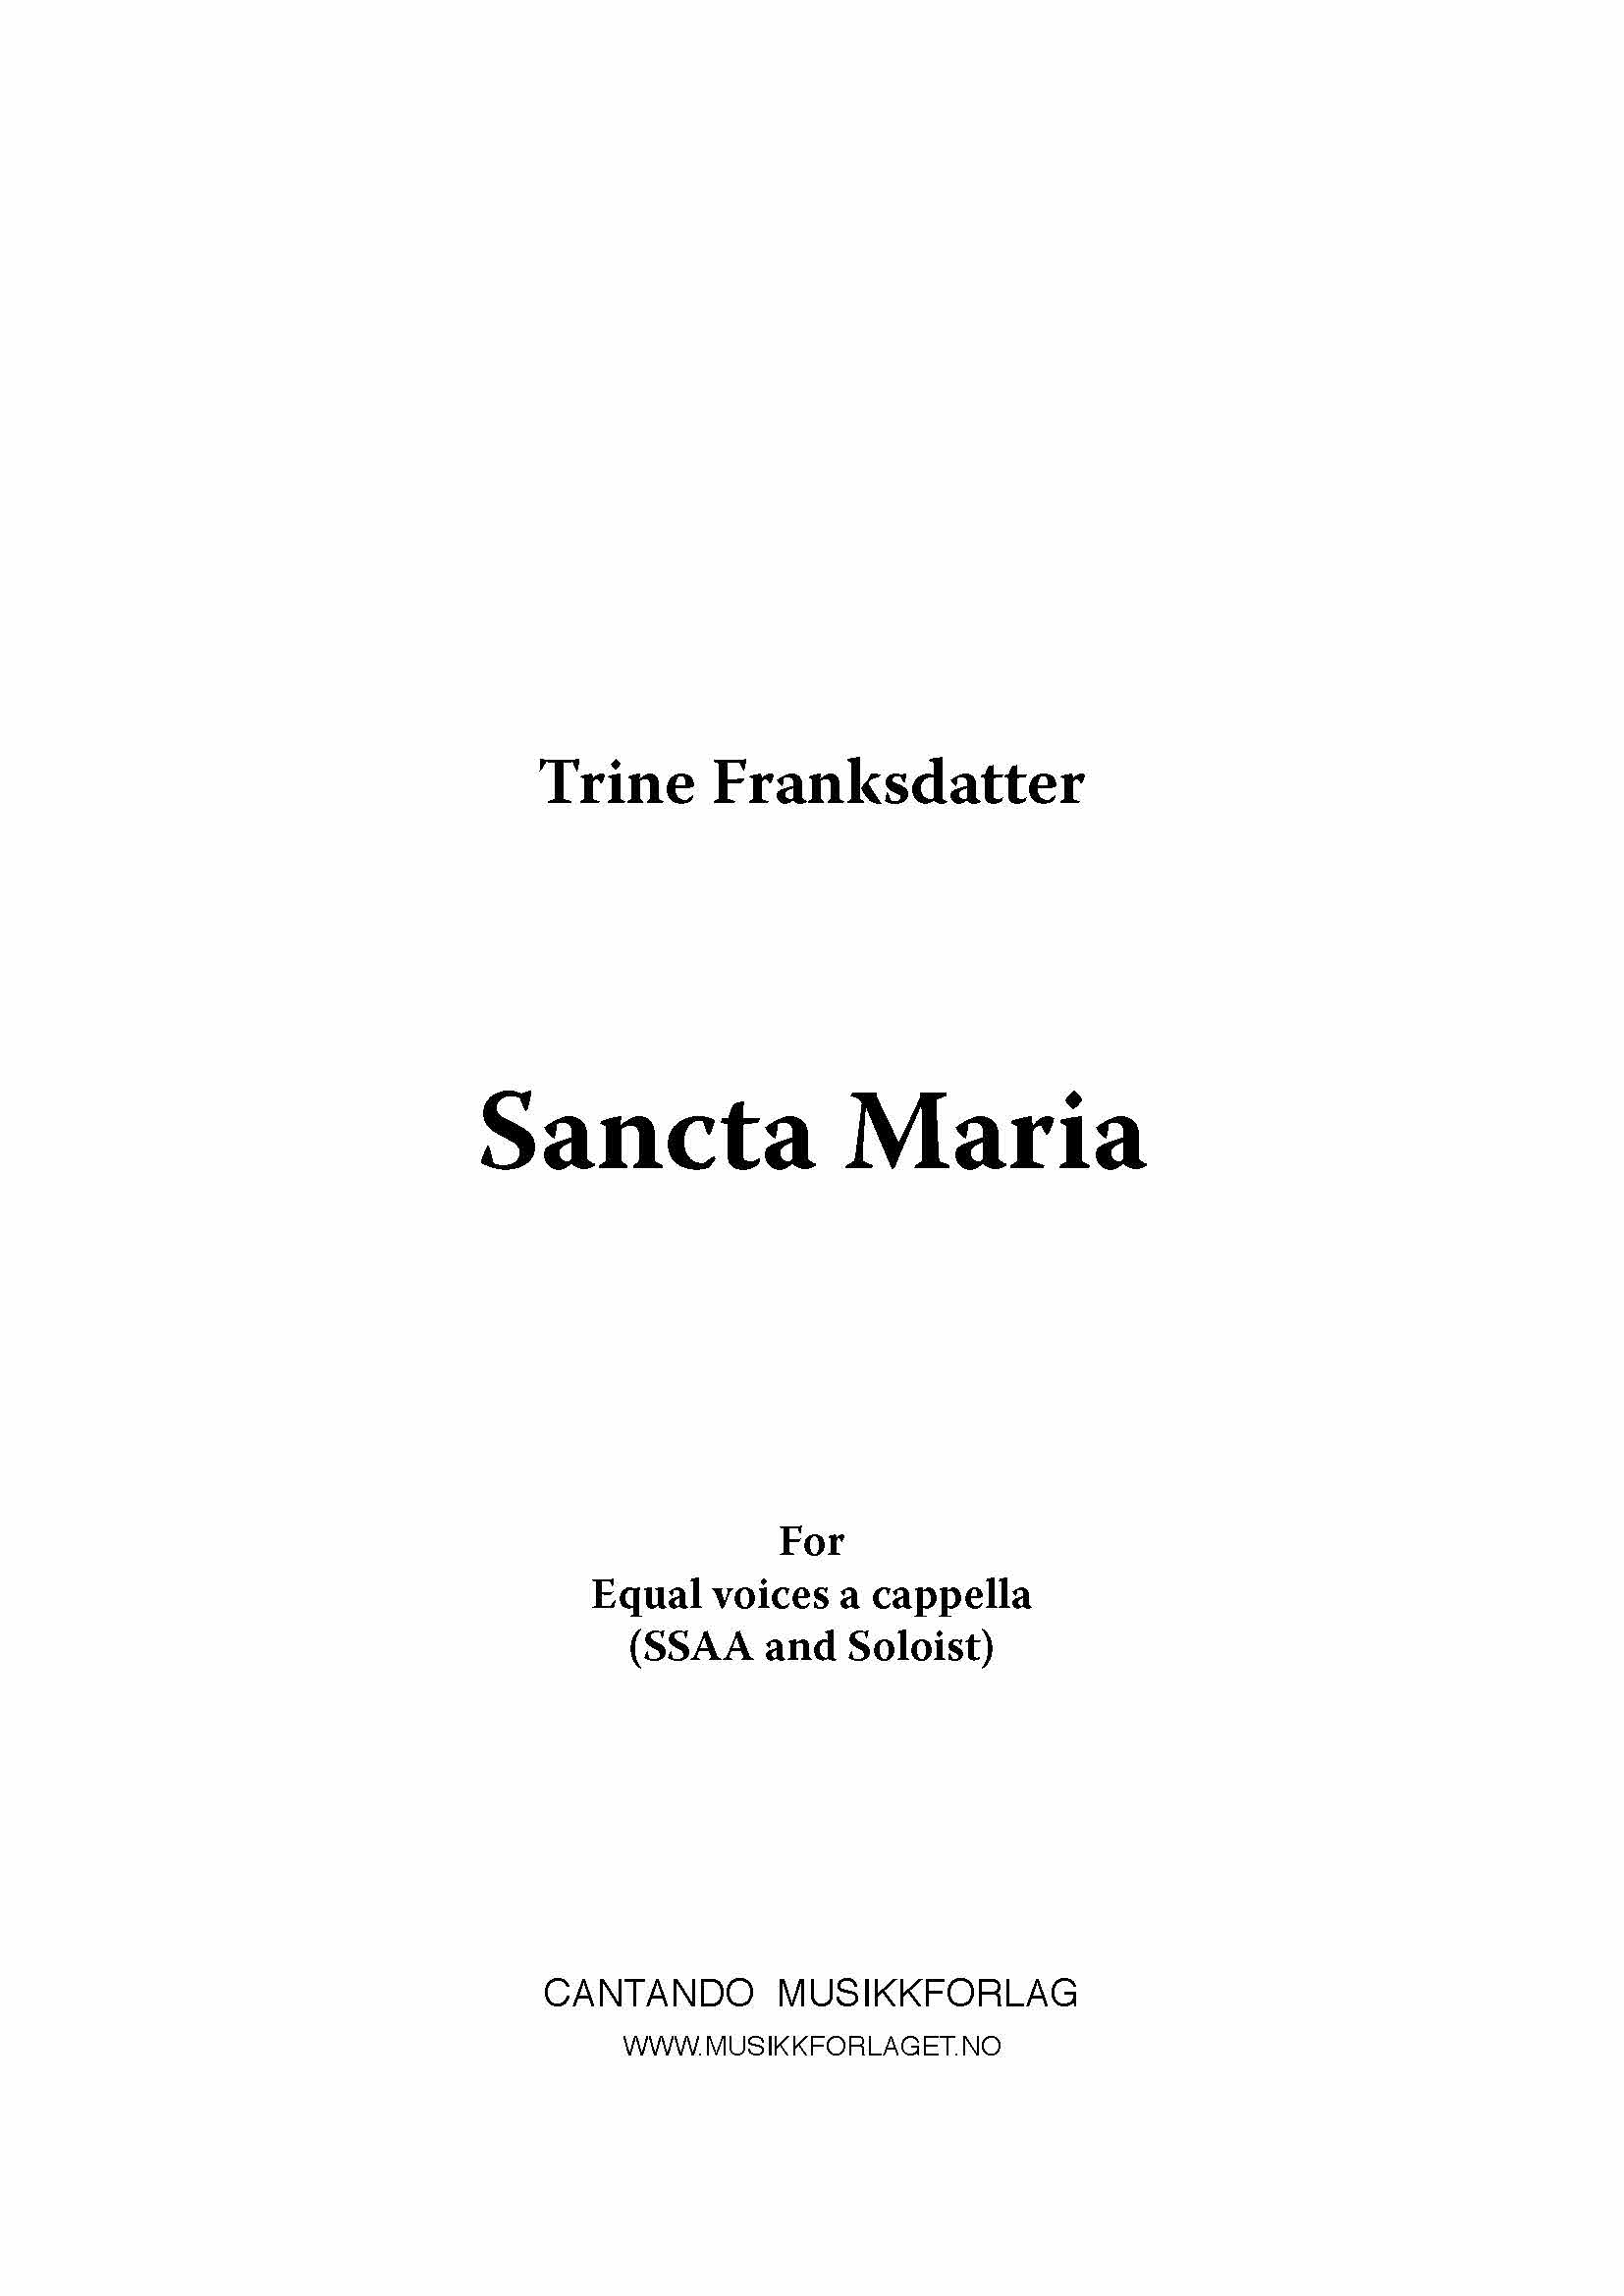 Sancta Maria - SSAA and Soloist